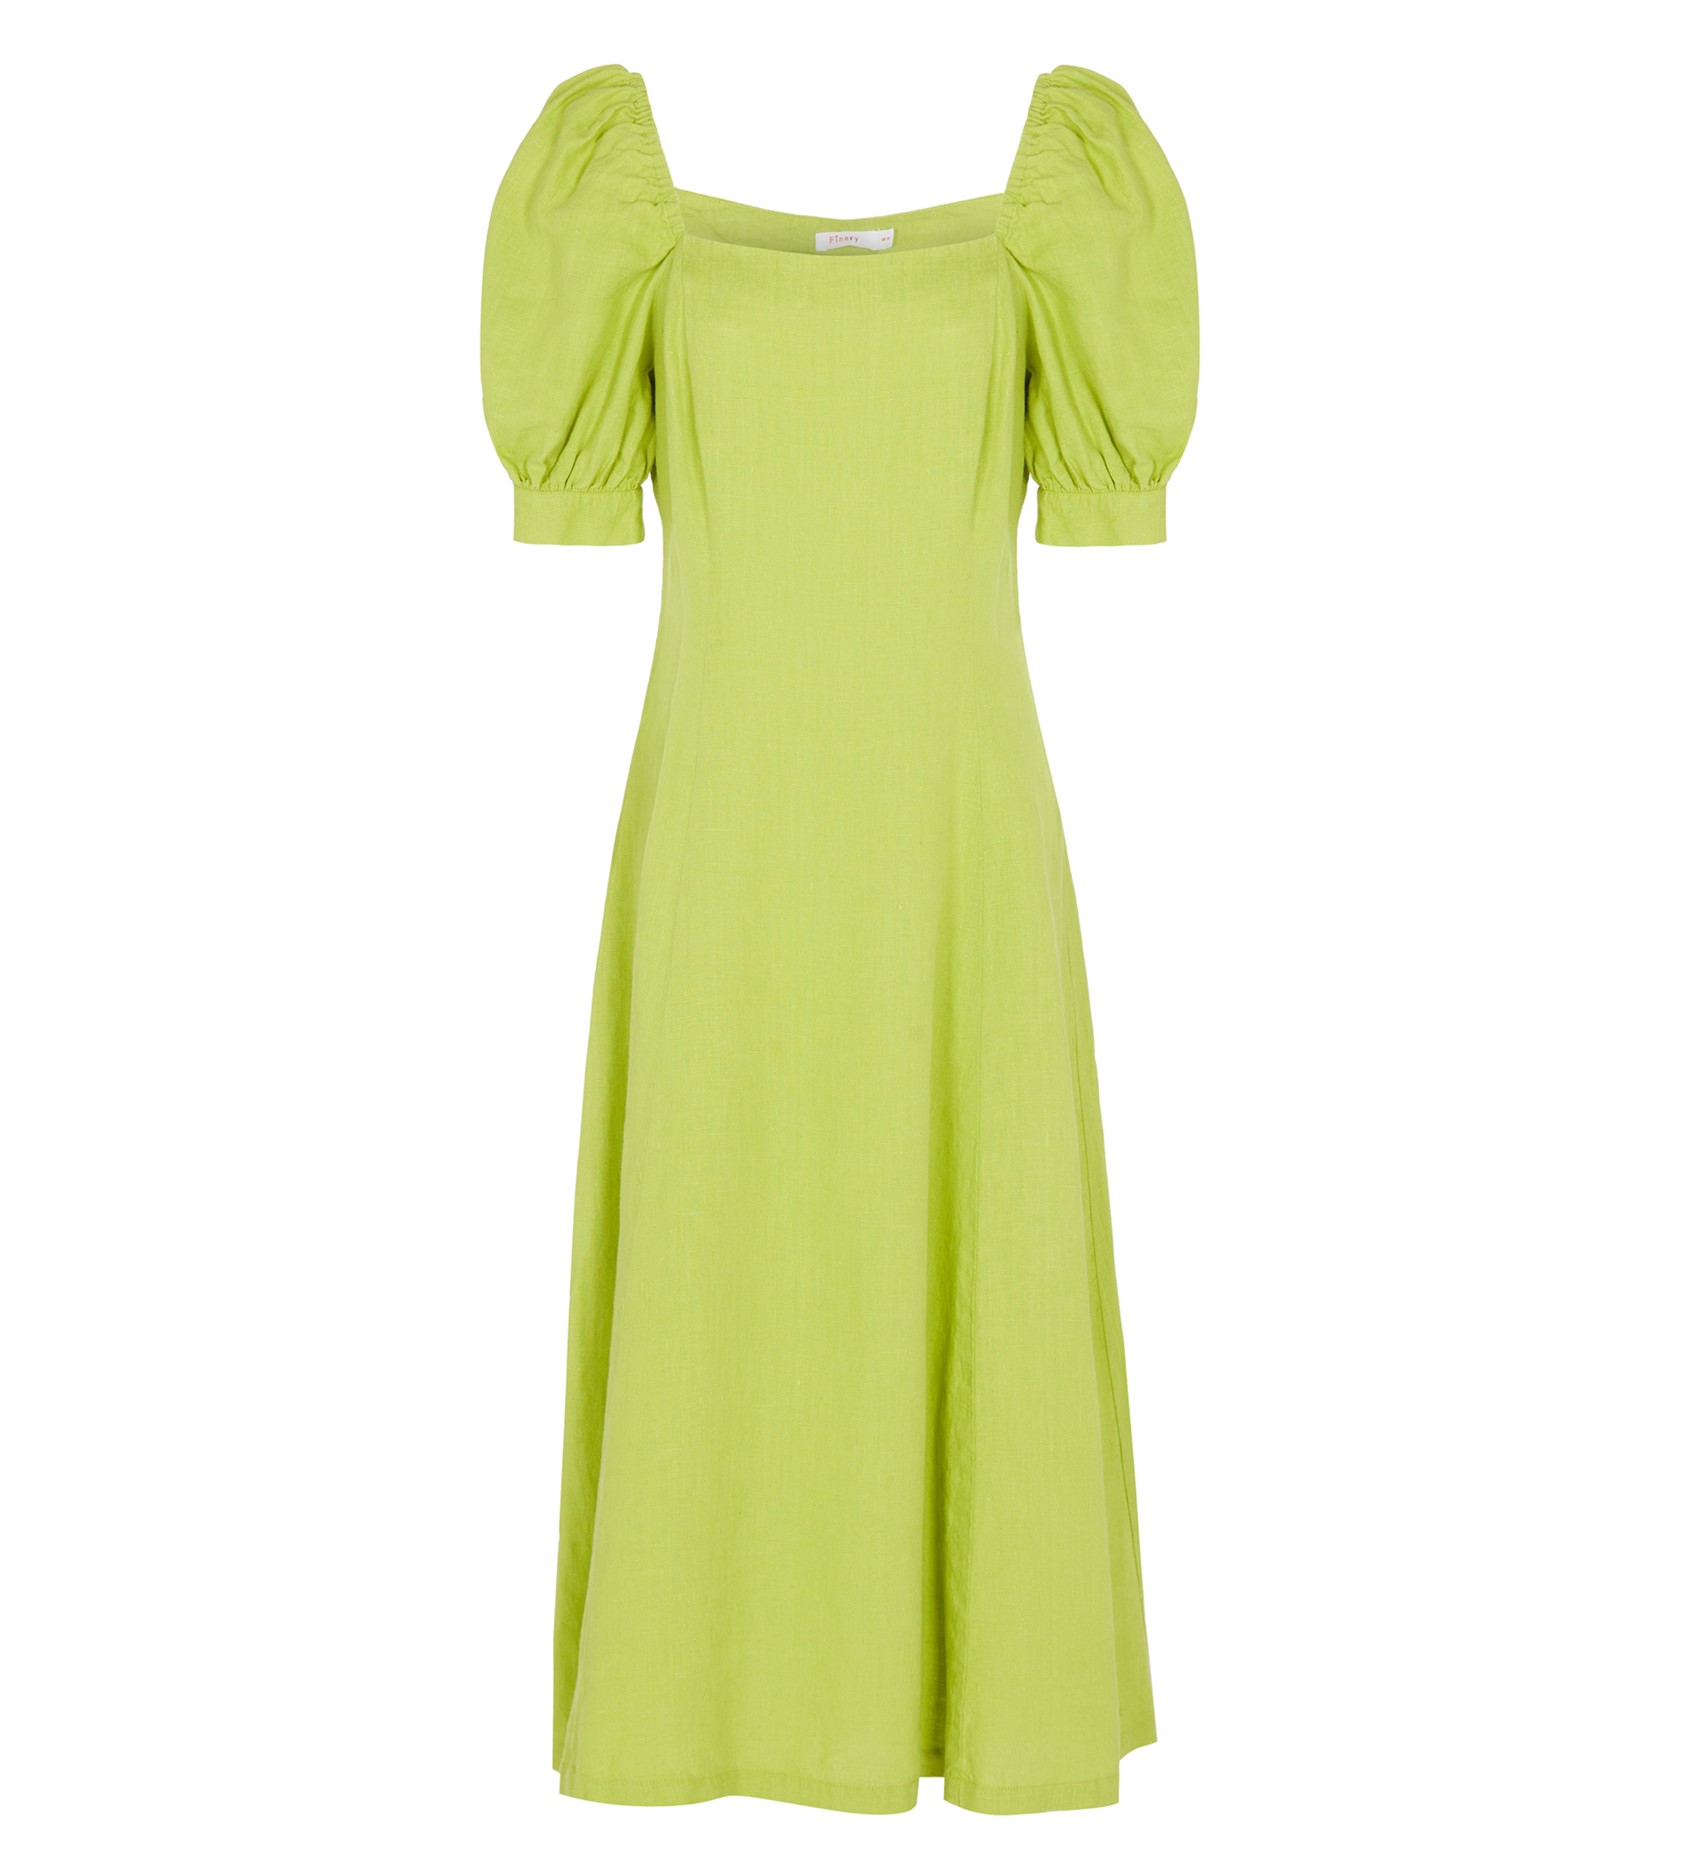 Kaylani Midi Lime Collared Dress Short Sleeves Finery London